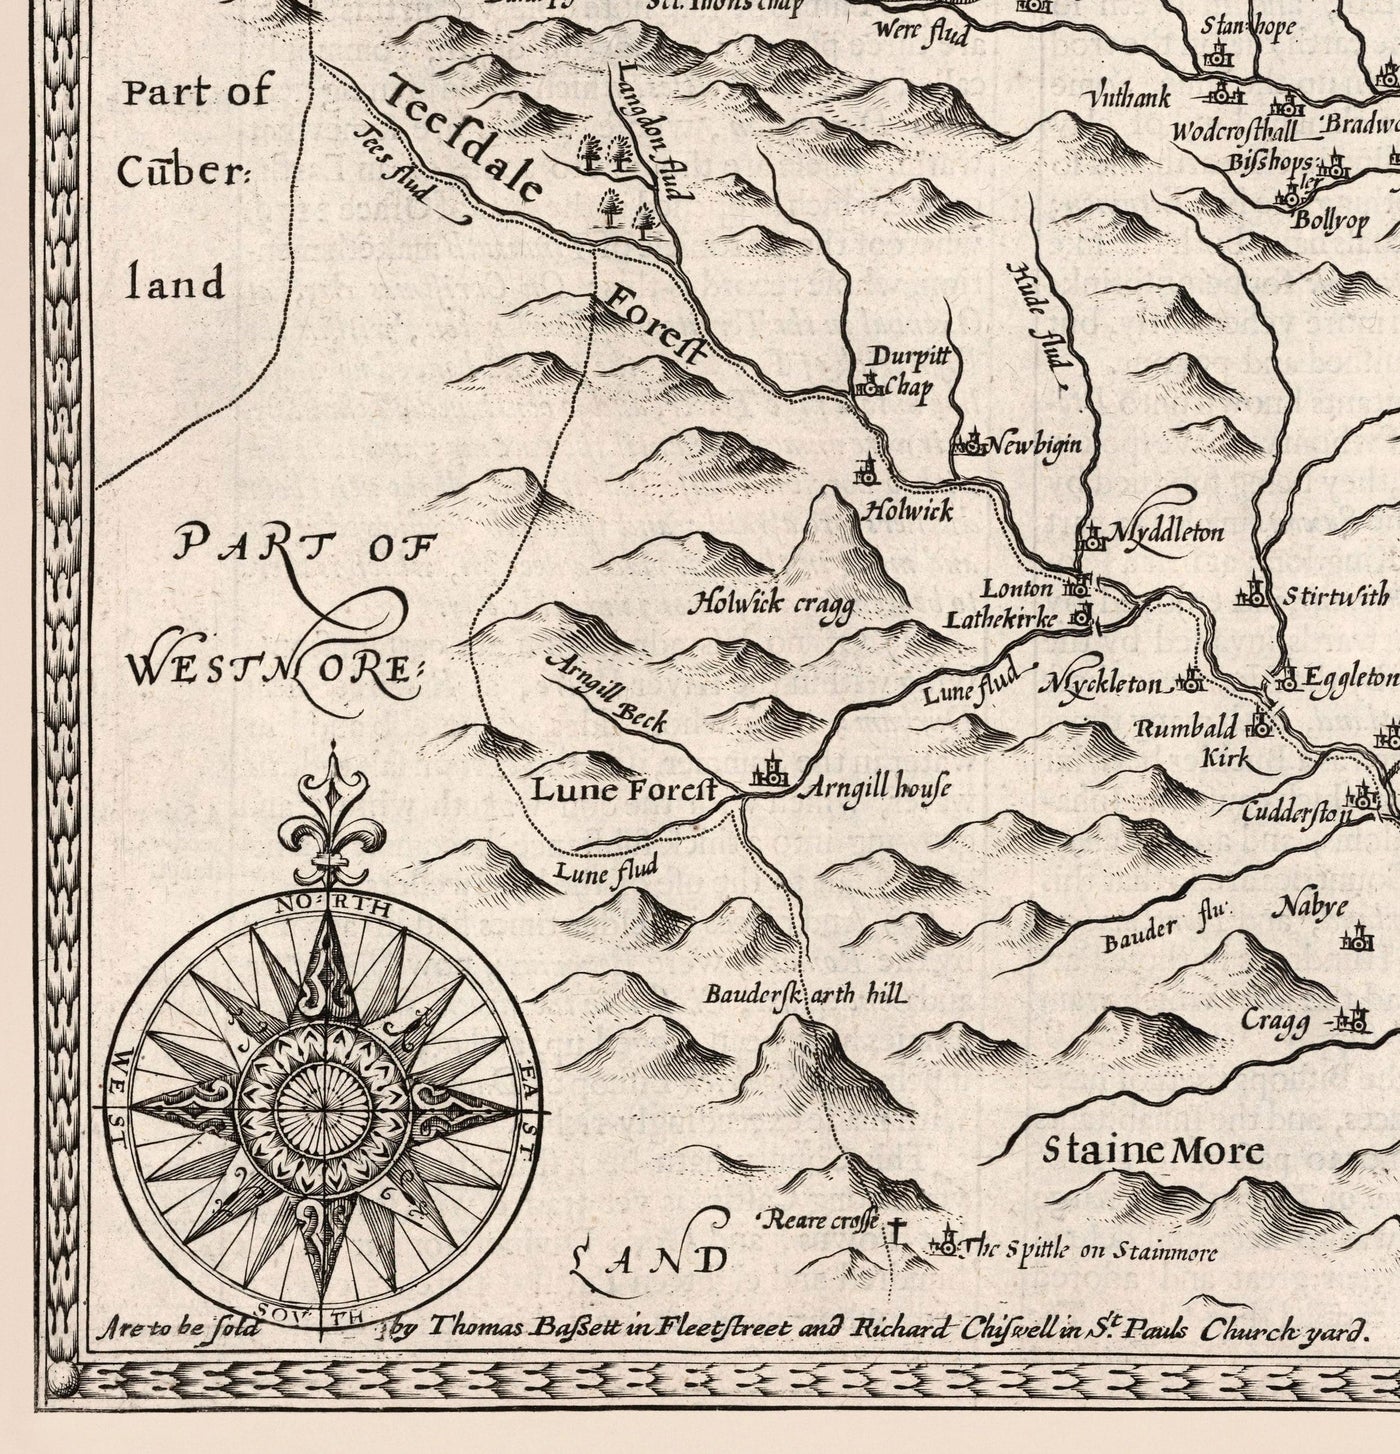 Old Monochrome Map of County Durham, 1611 by John Speed - Darlington, Stockton-on-Tees, Sunderland, Newcastle